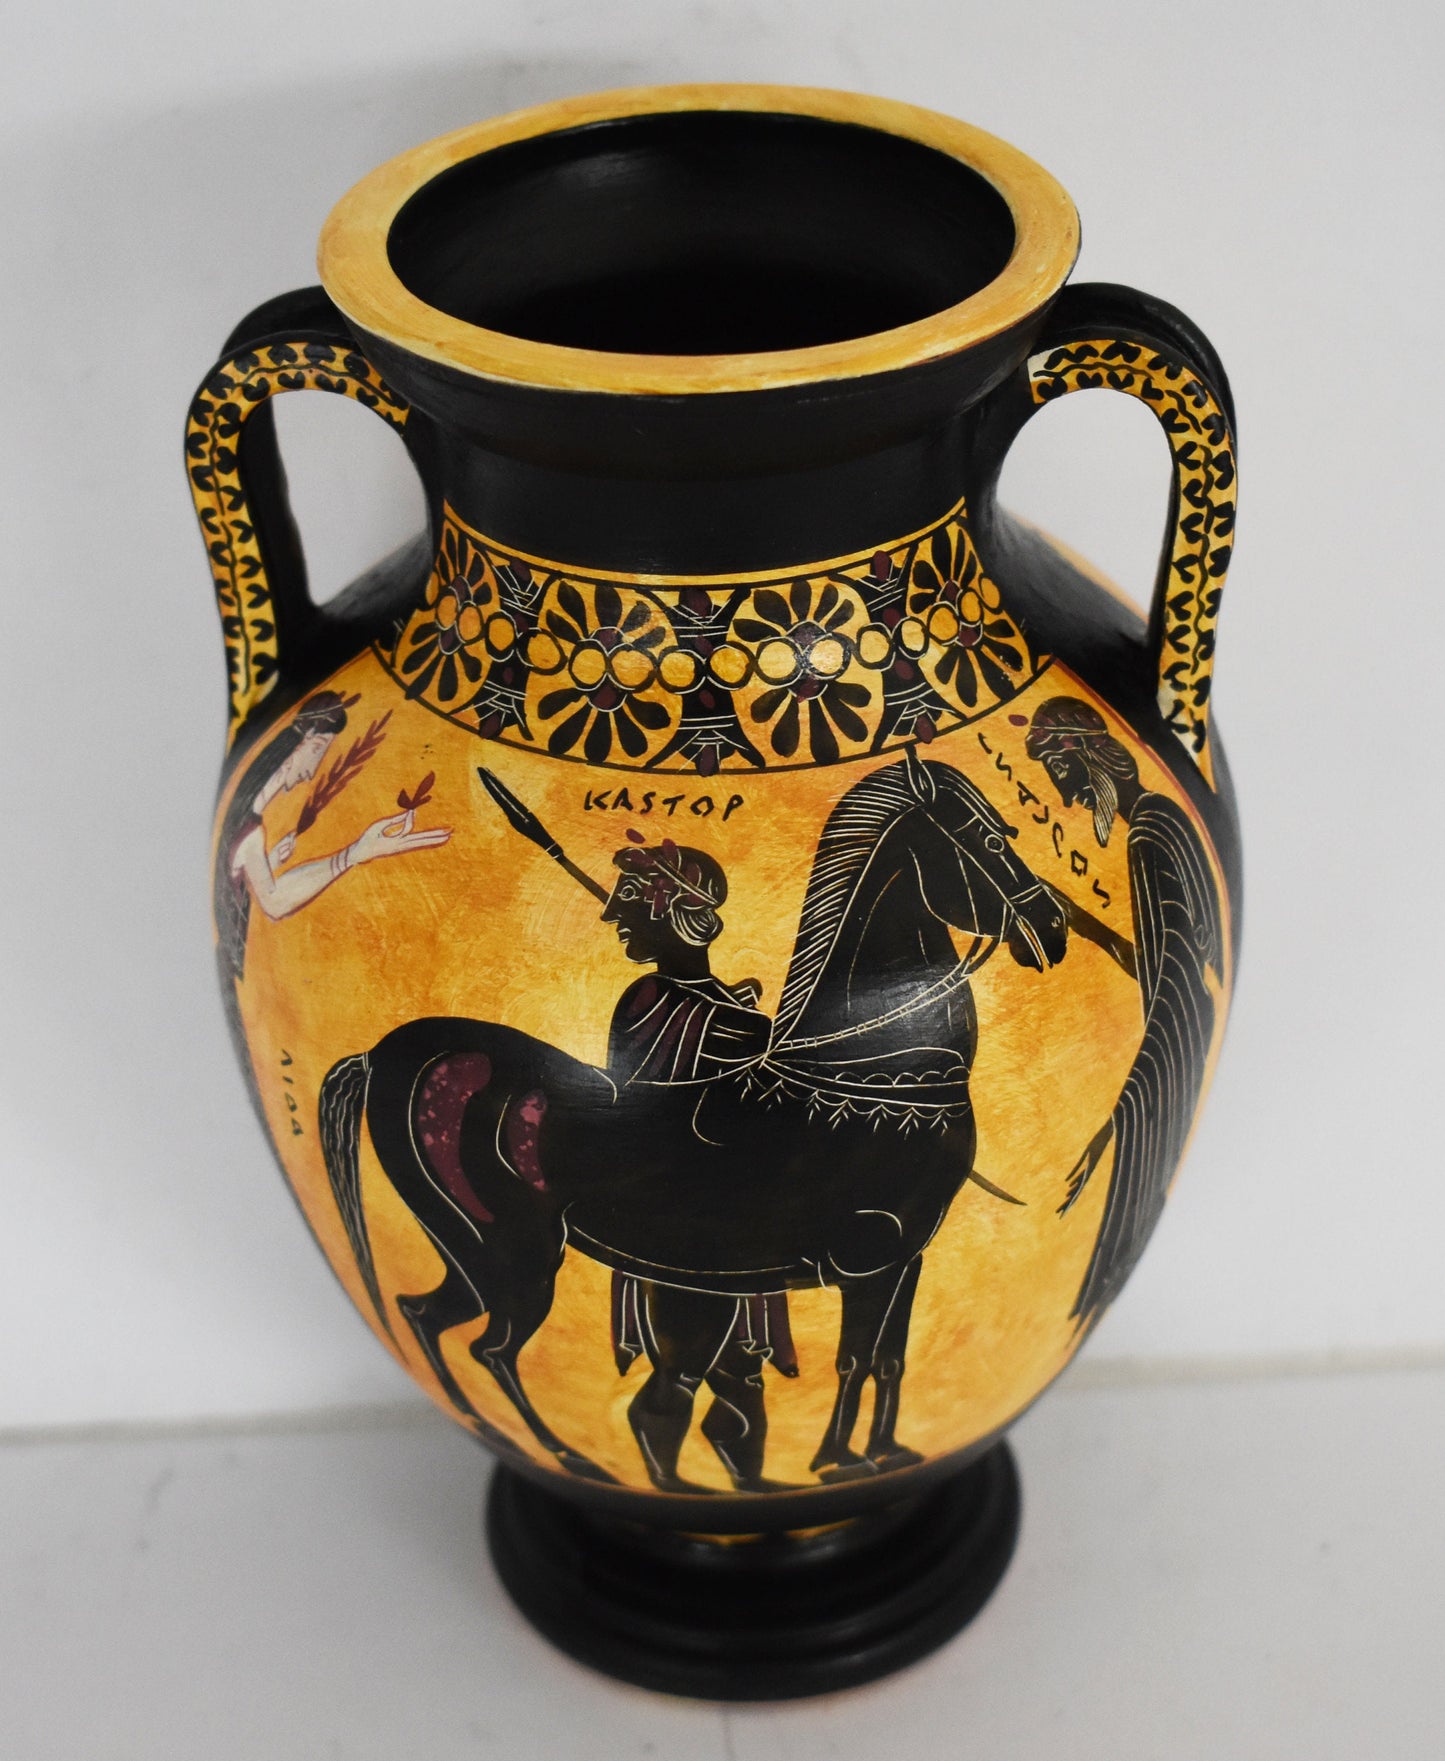 Achilles and Ajax playing Dice - Trojan War, Homer's Iliad - Attic Black Figure - Small - Musei Vaticani - Replica - Amphora Vase